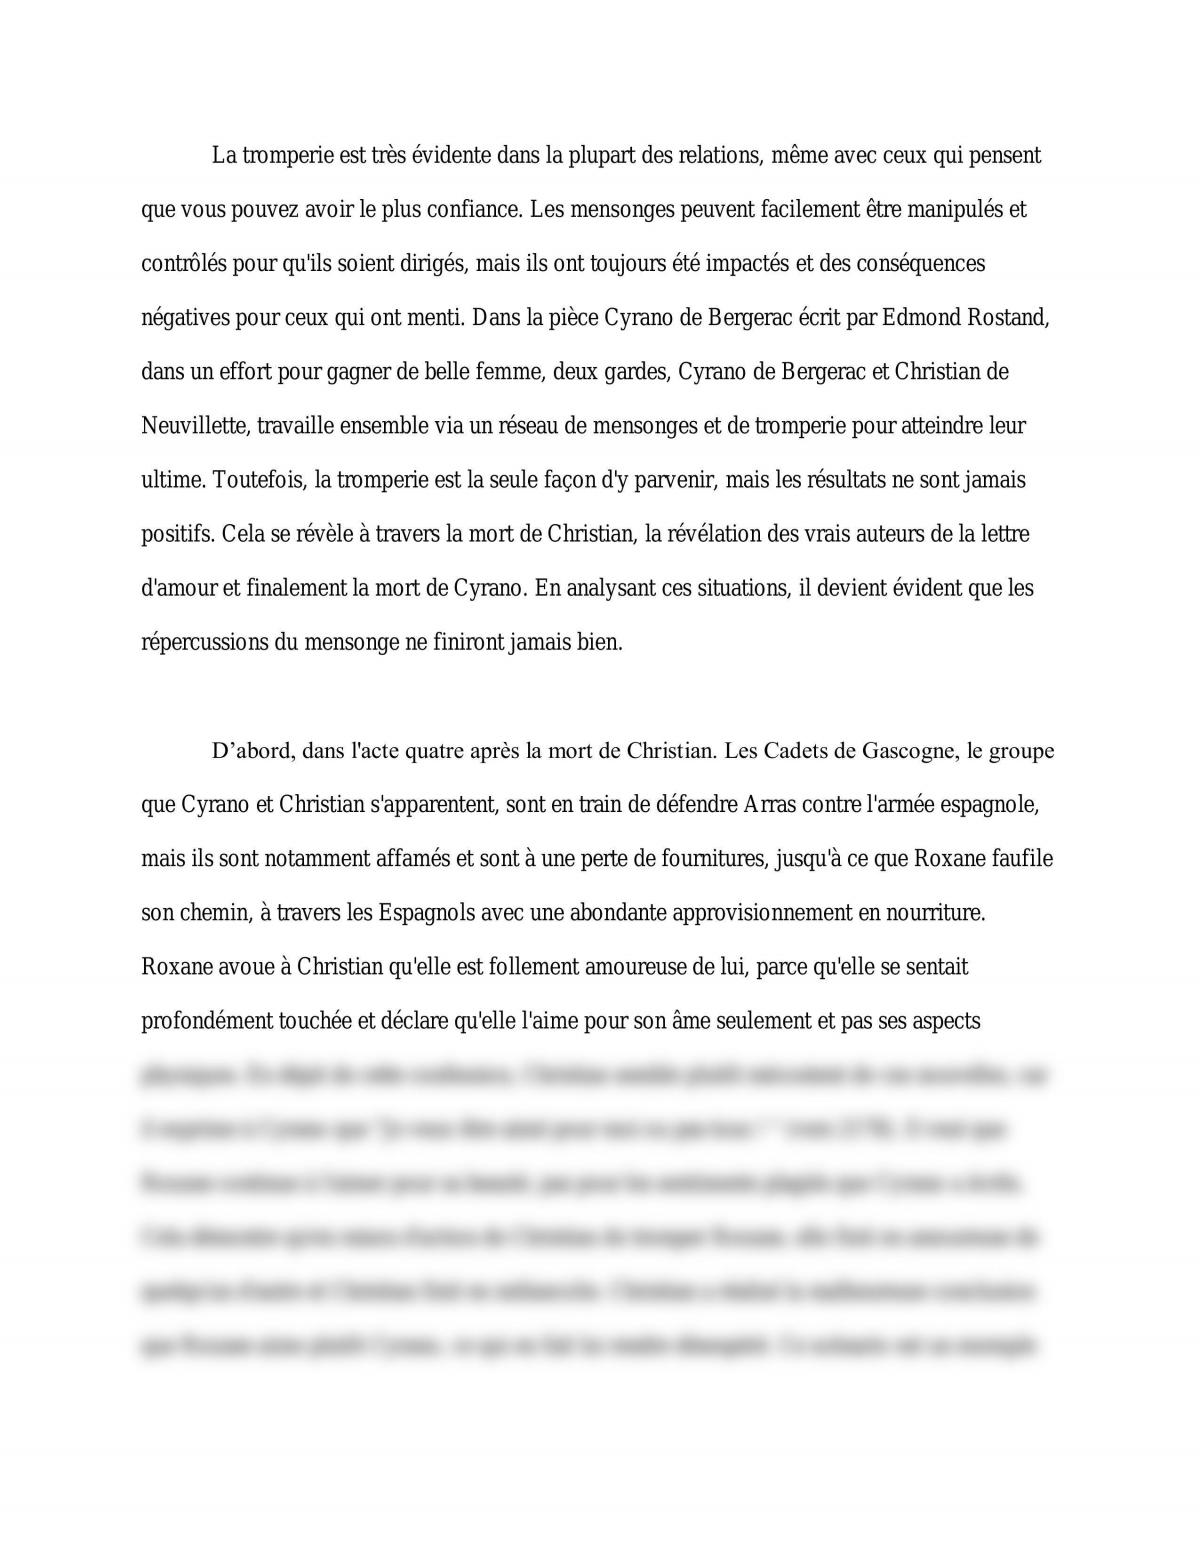 Cyrano de Bergerac - Page 1